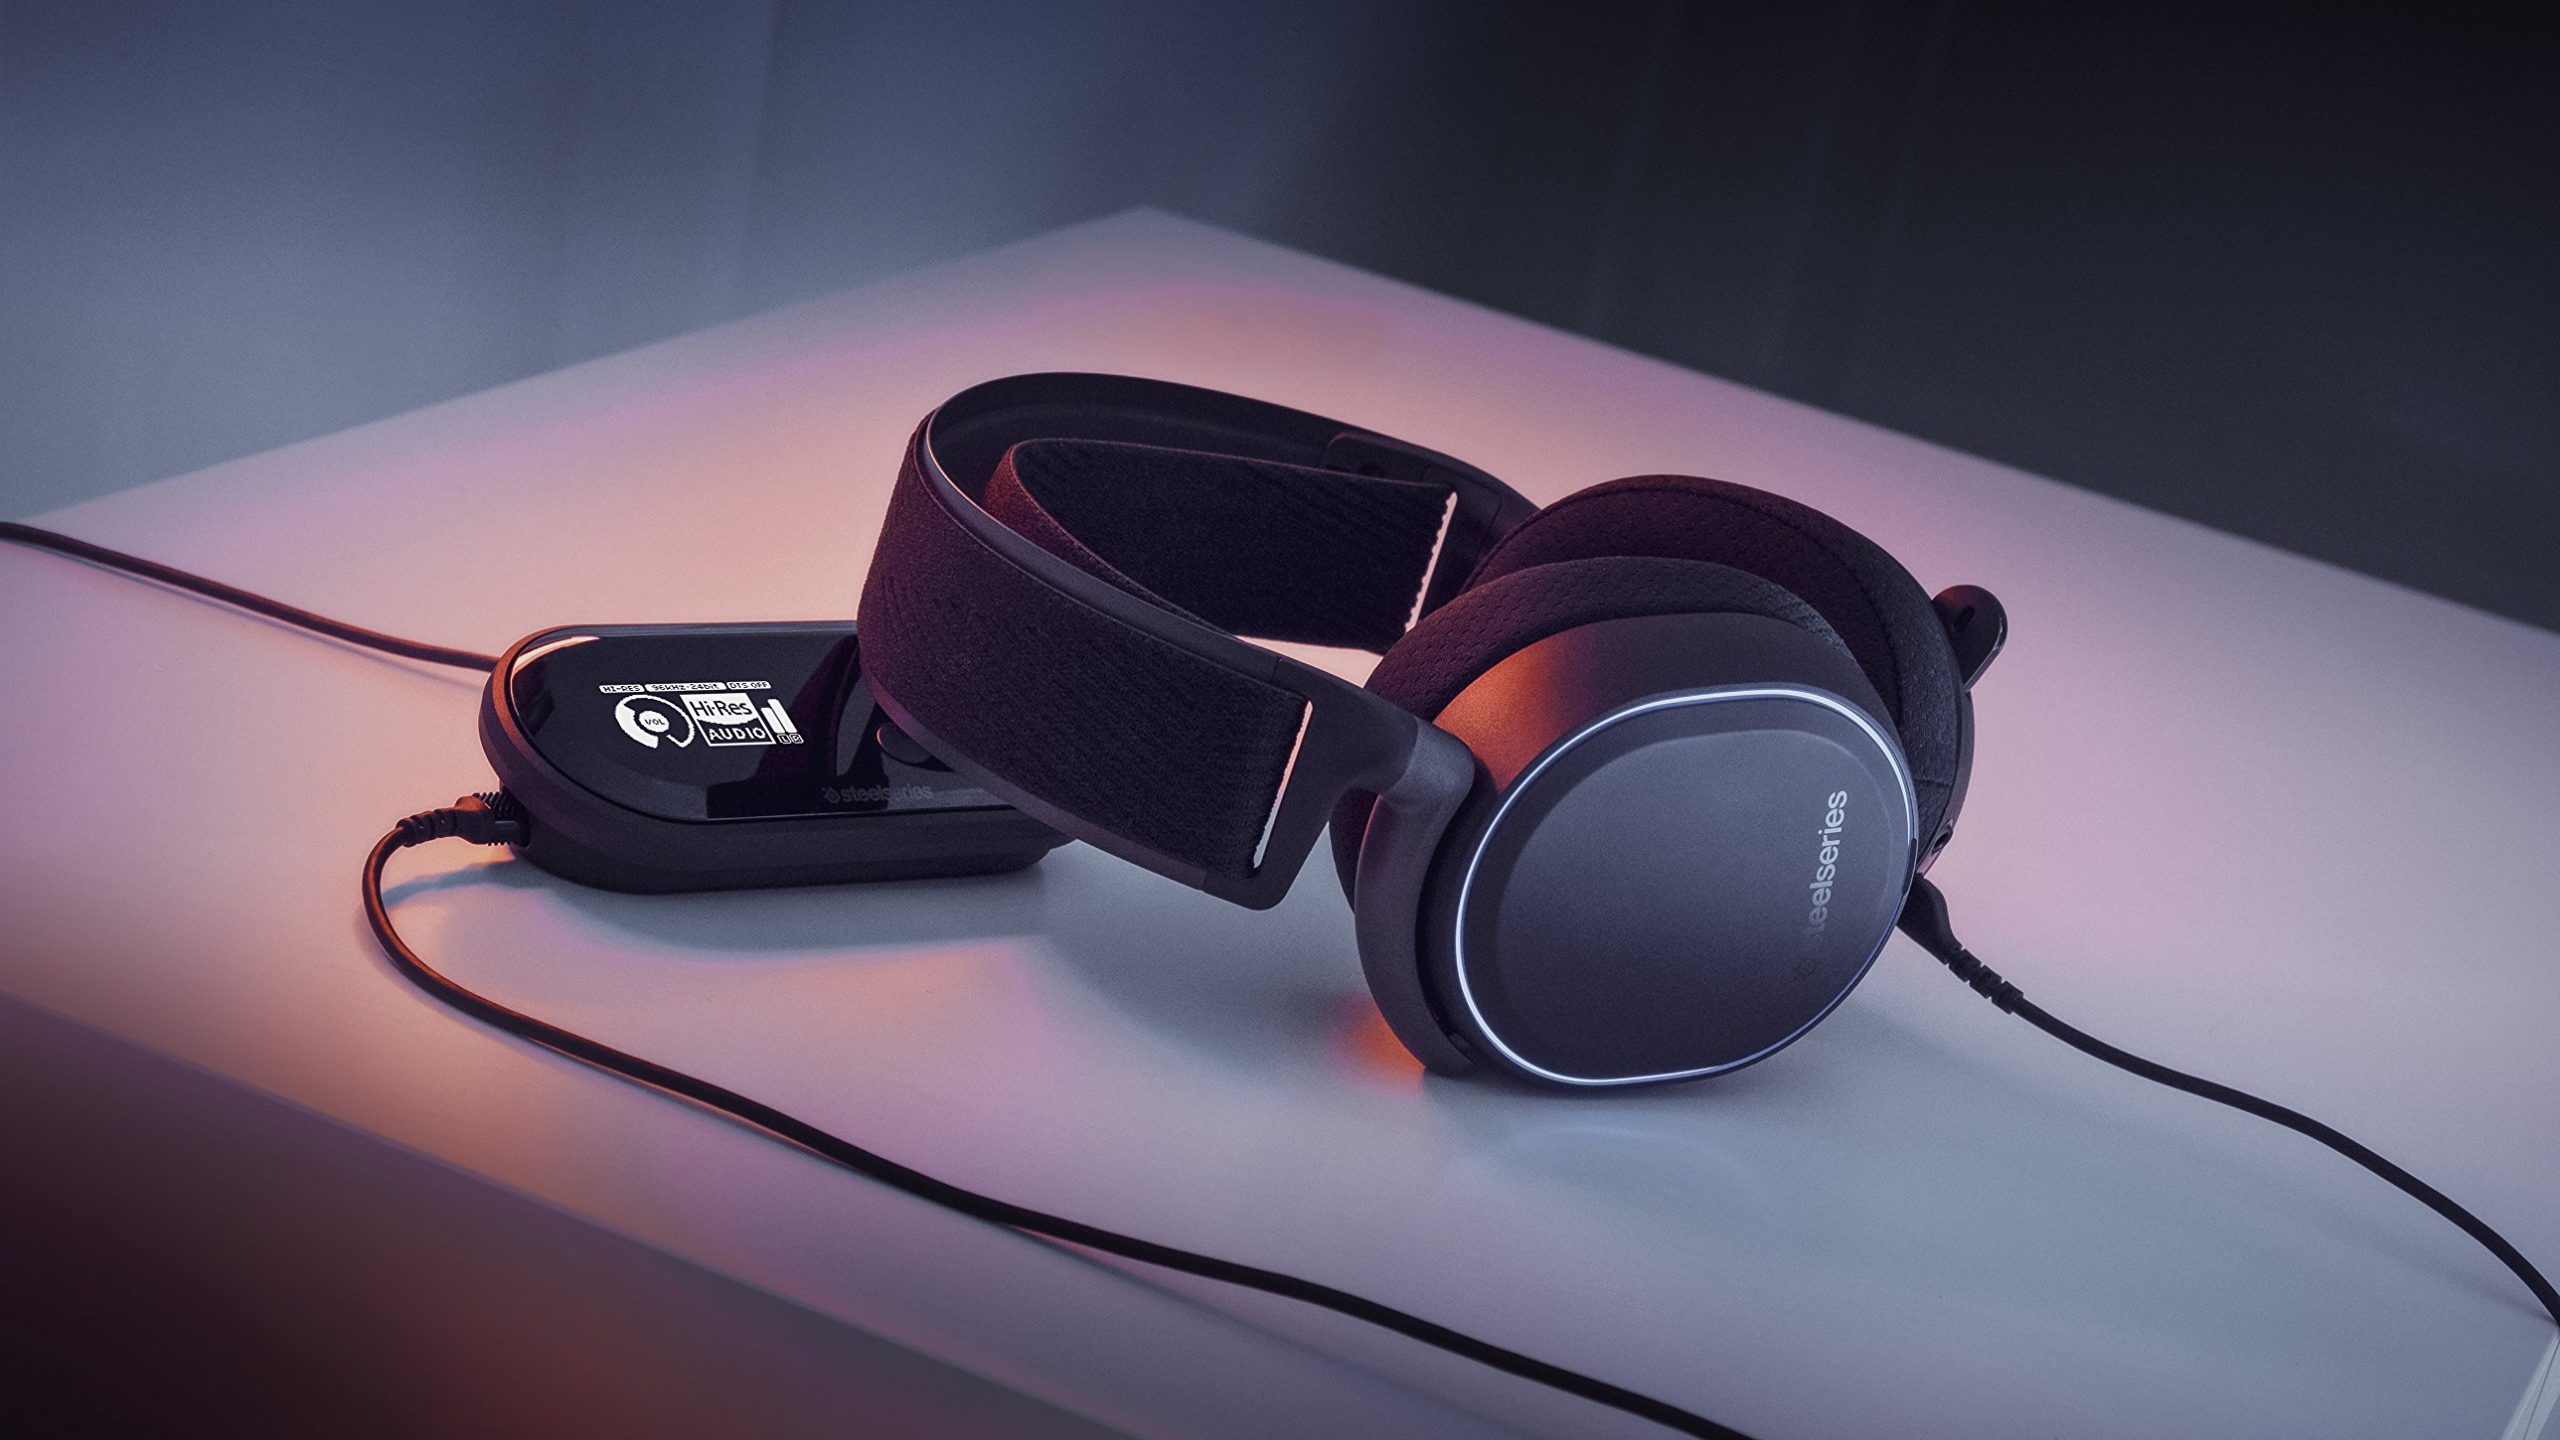 SteelSeries Arctis Pro headset